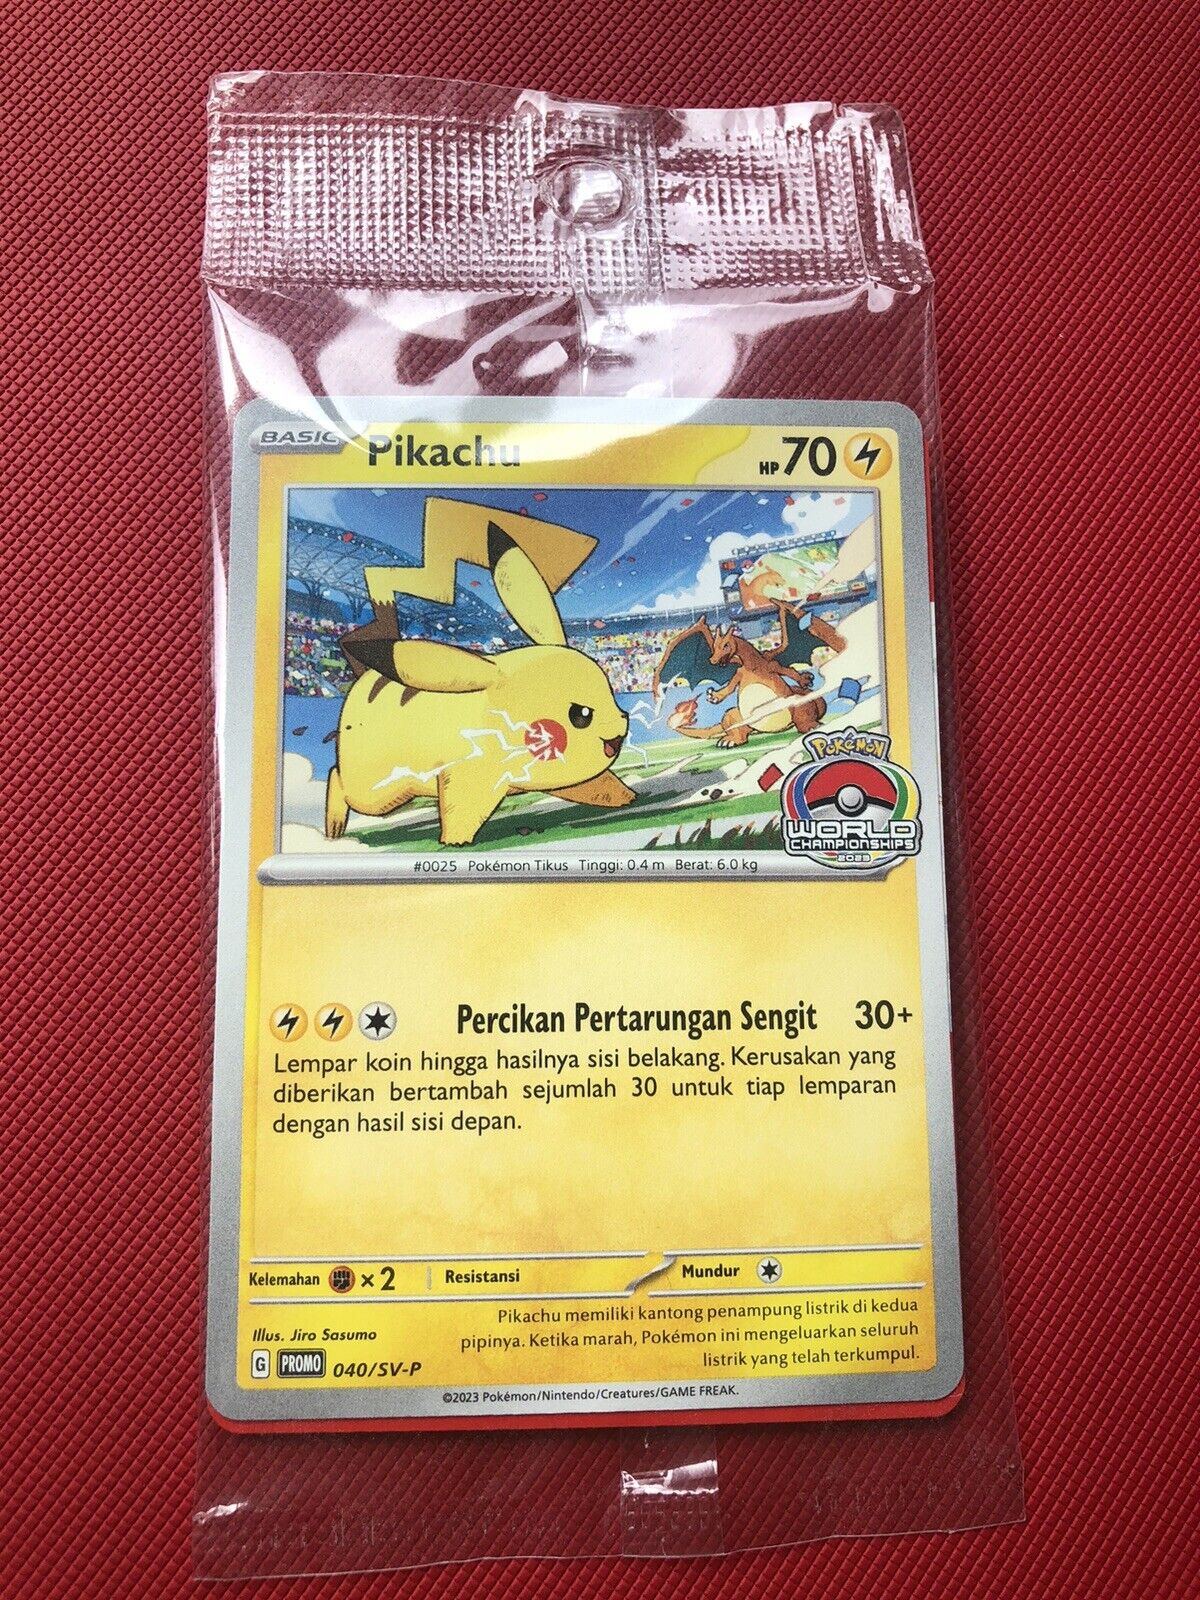 2023 Pokemon Indonesian Worlds Promo Pikachu Sealed 040/SV-P UK Seller